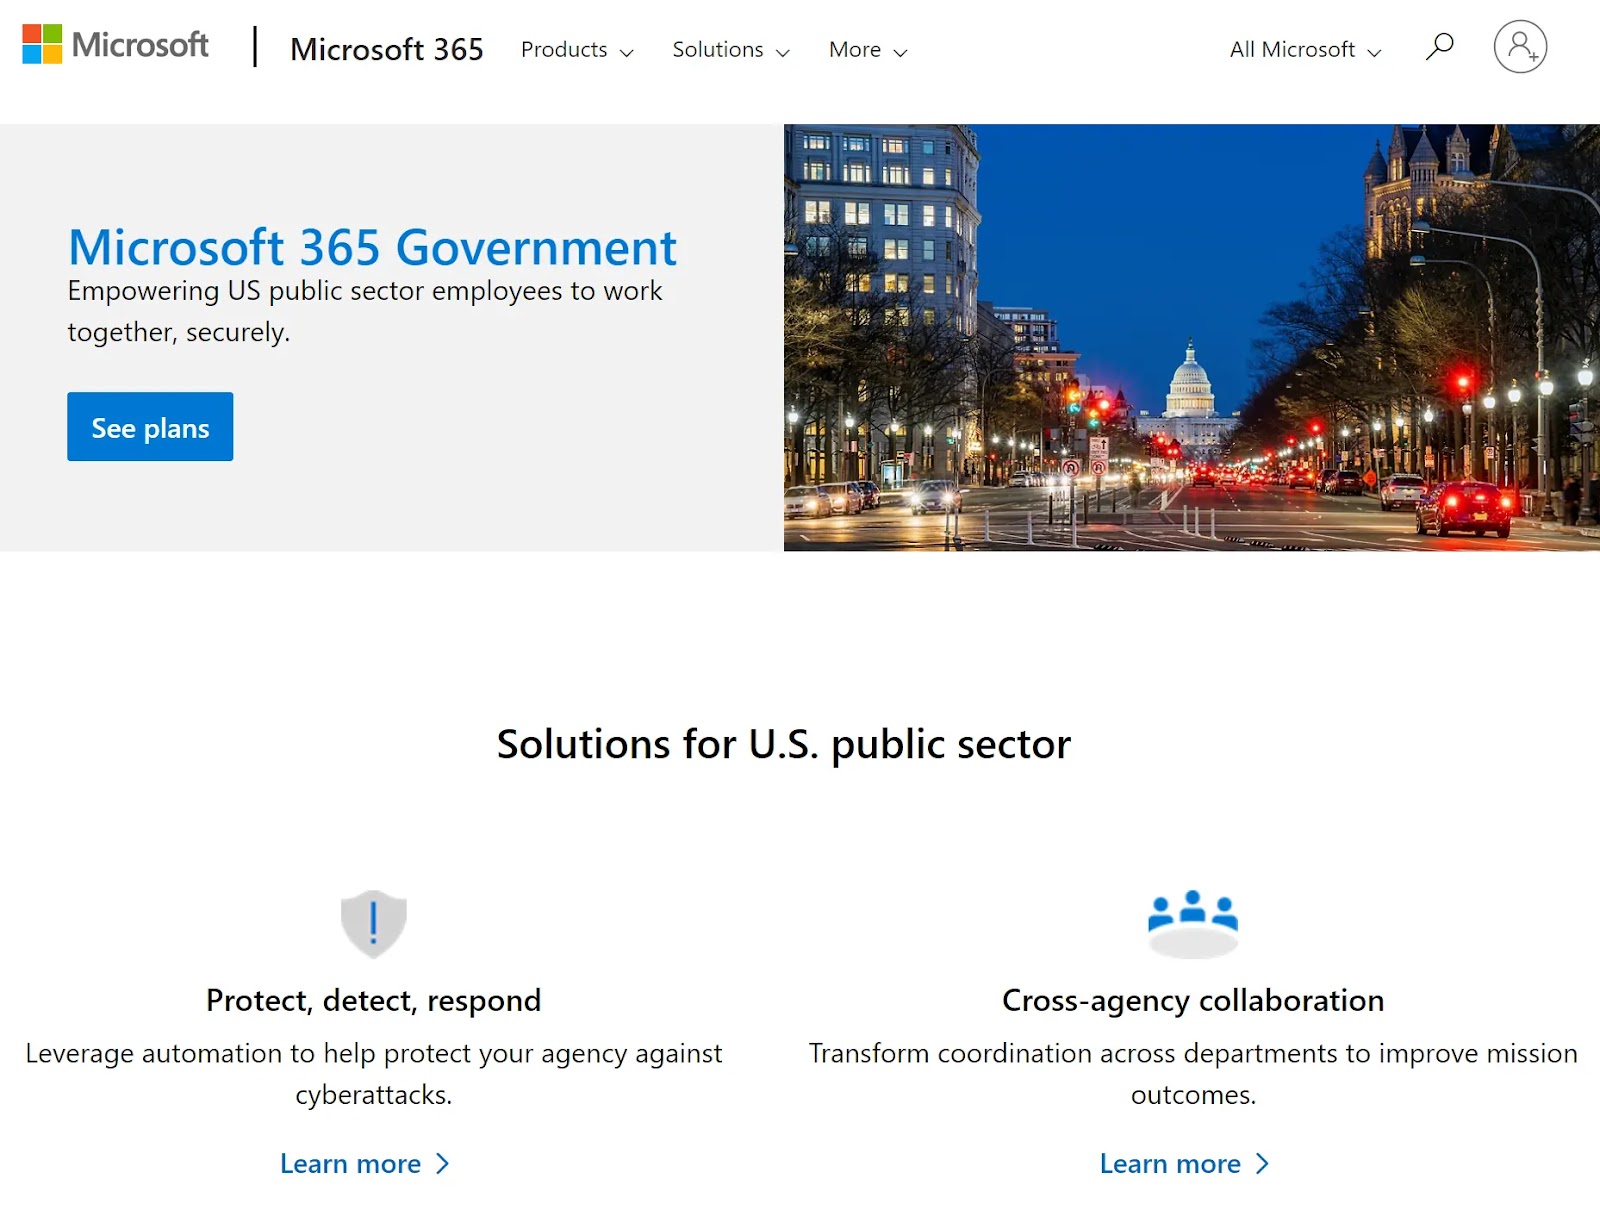 Microsoft 365 Government landing page